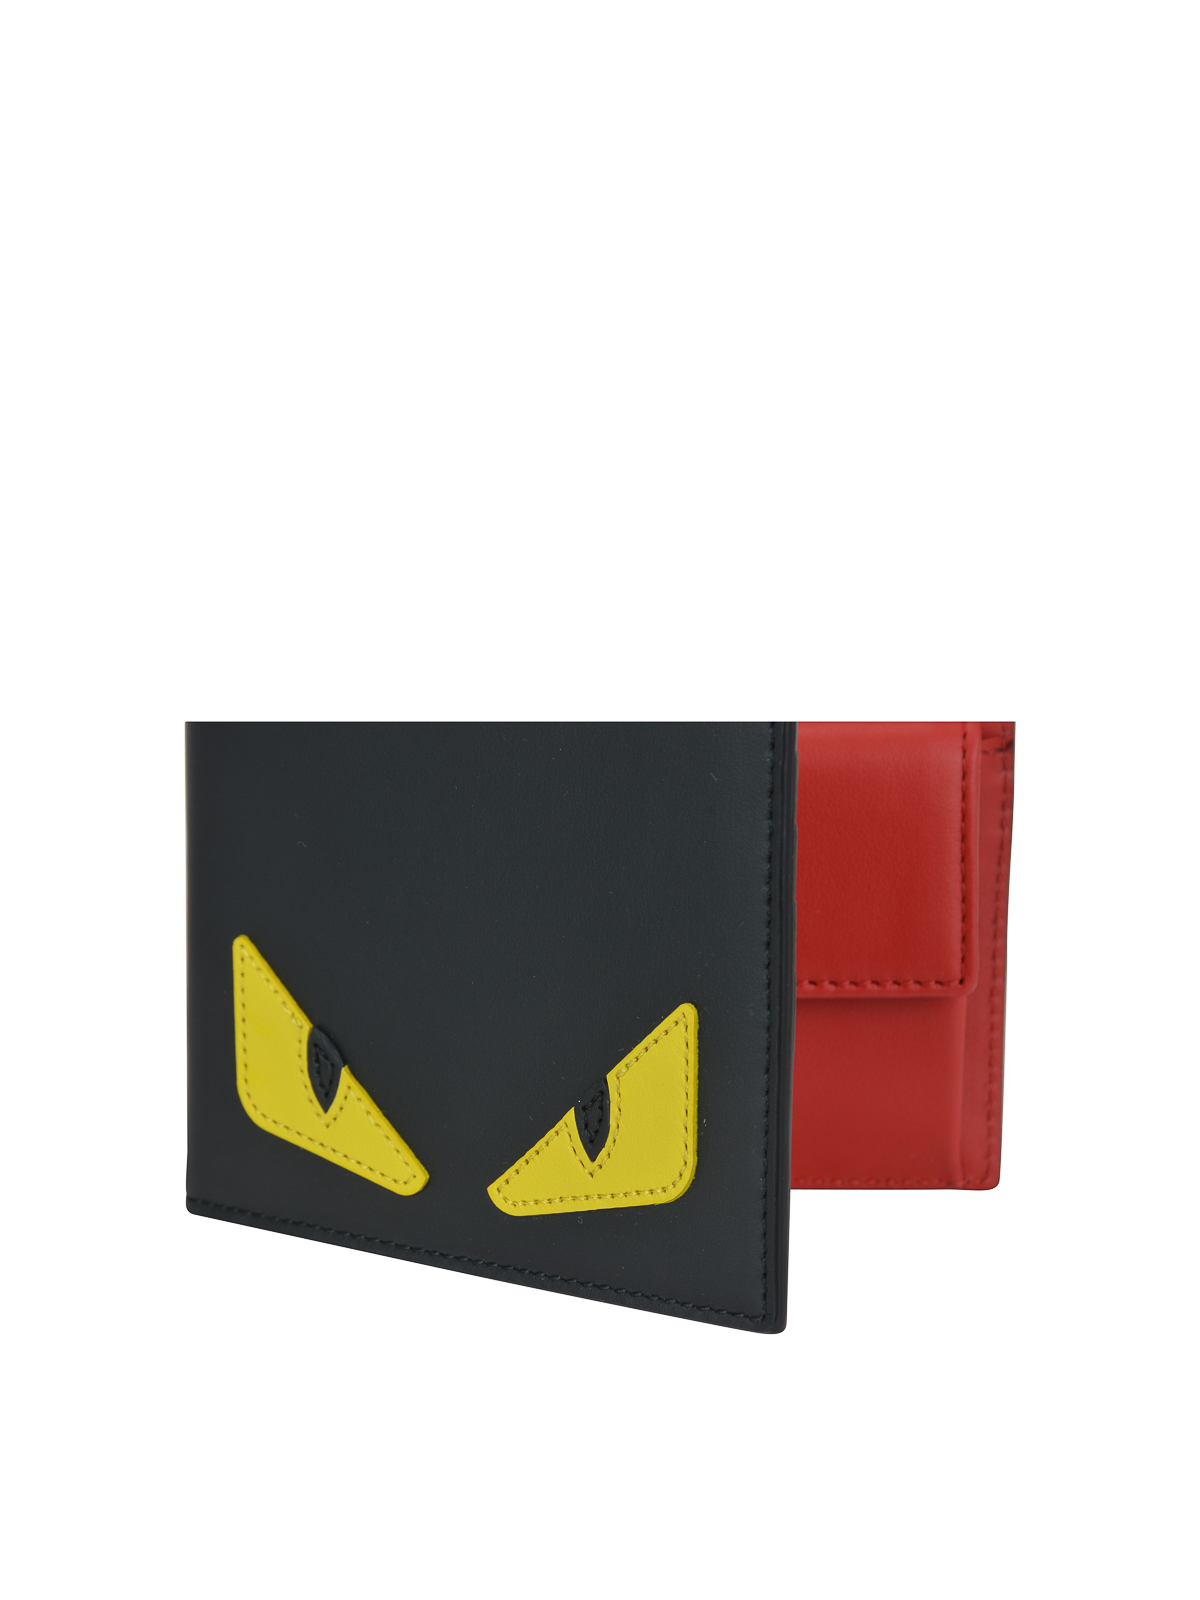 F is Fendi Bi-fold Wallet - Red leather compact wallet